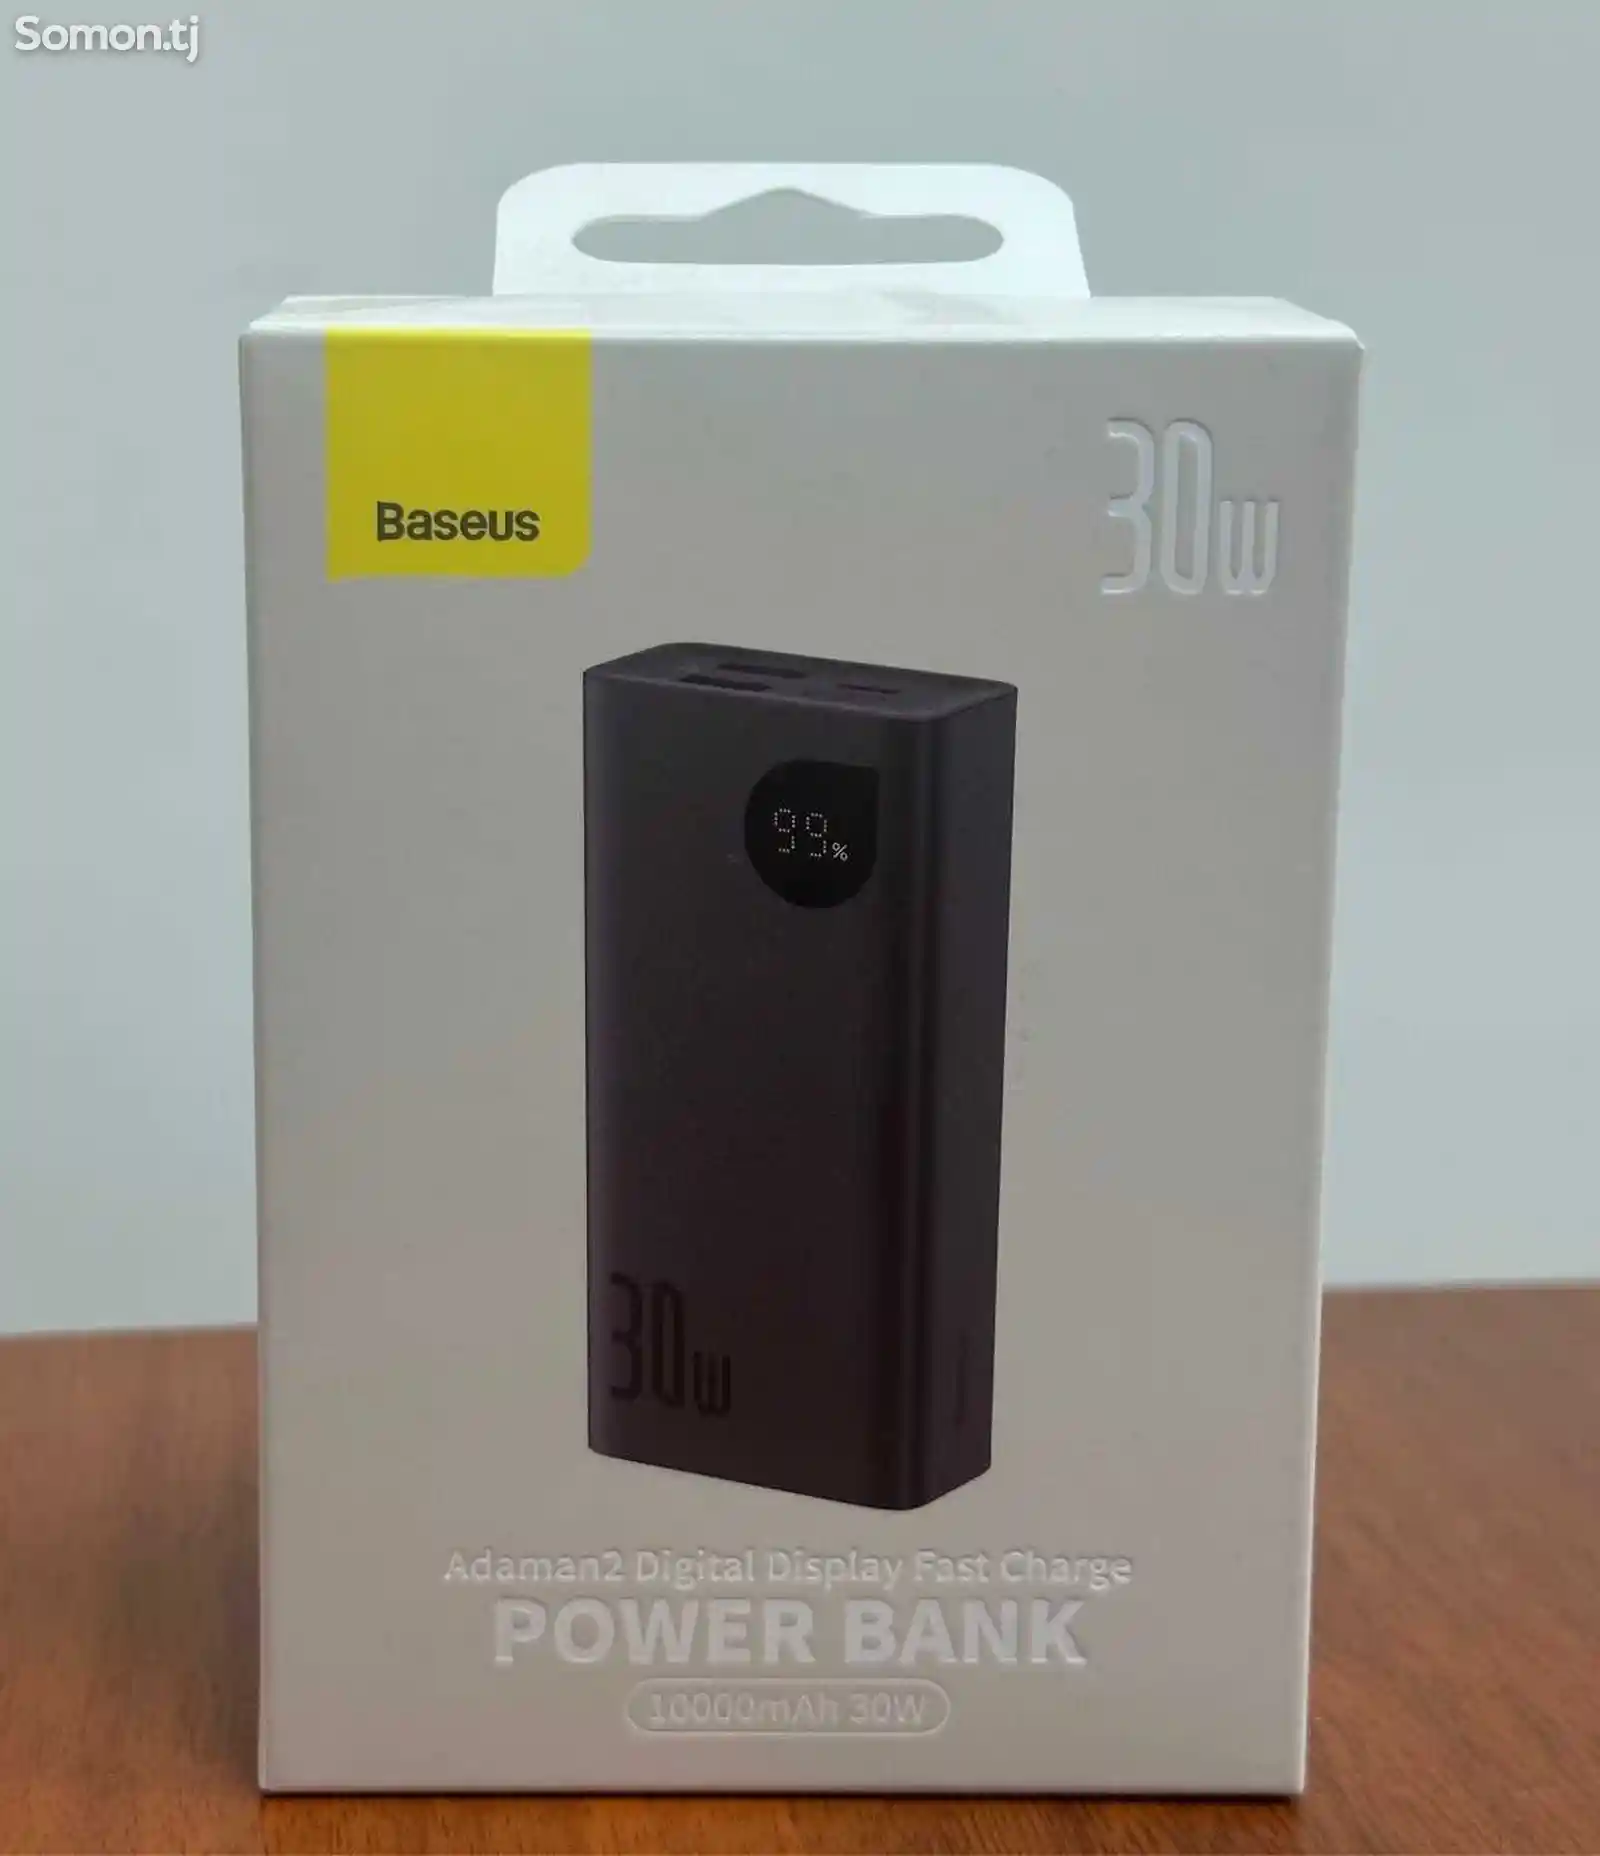 Внешний аккумулятор Baseus Adaman2 Digital Display Fast Charge Power Bank